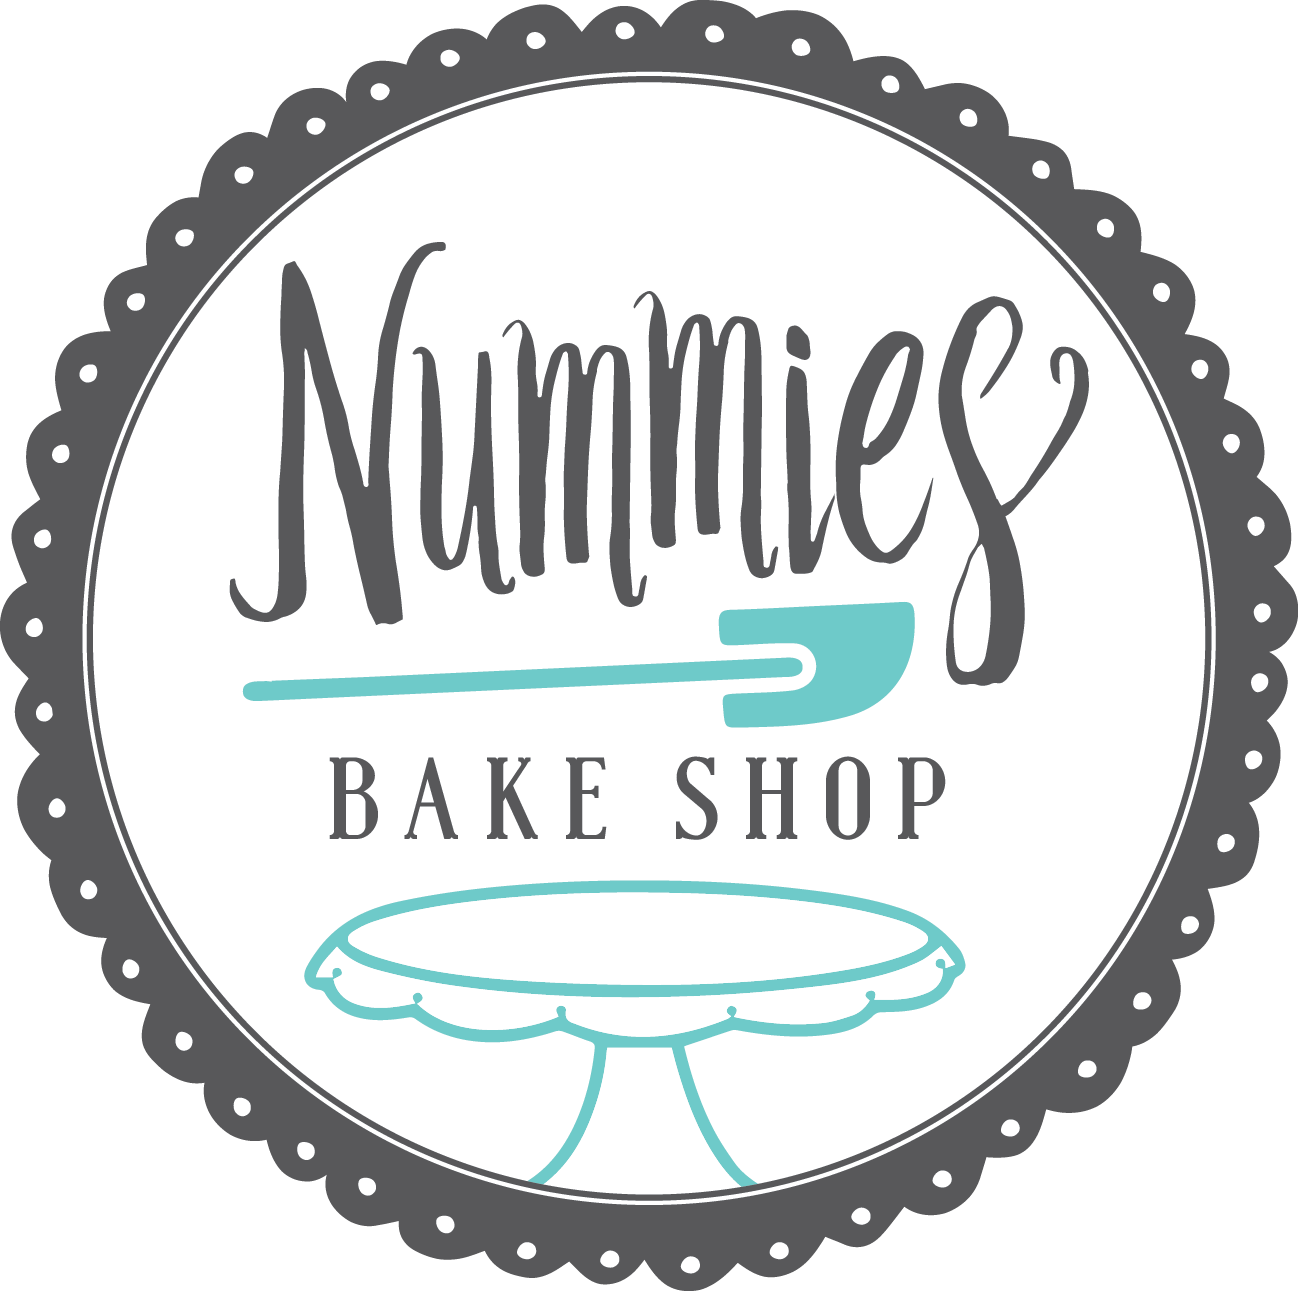 Nummies Bake Shop